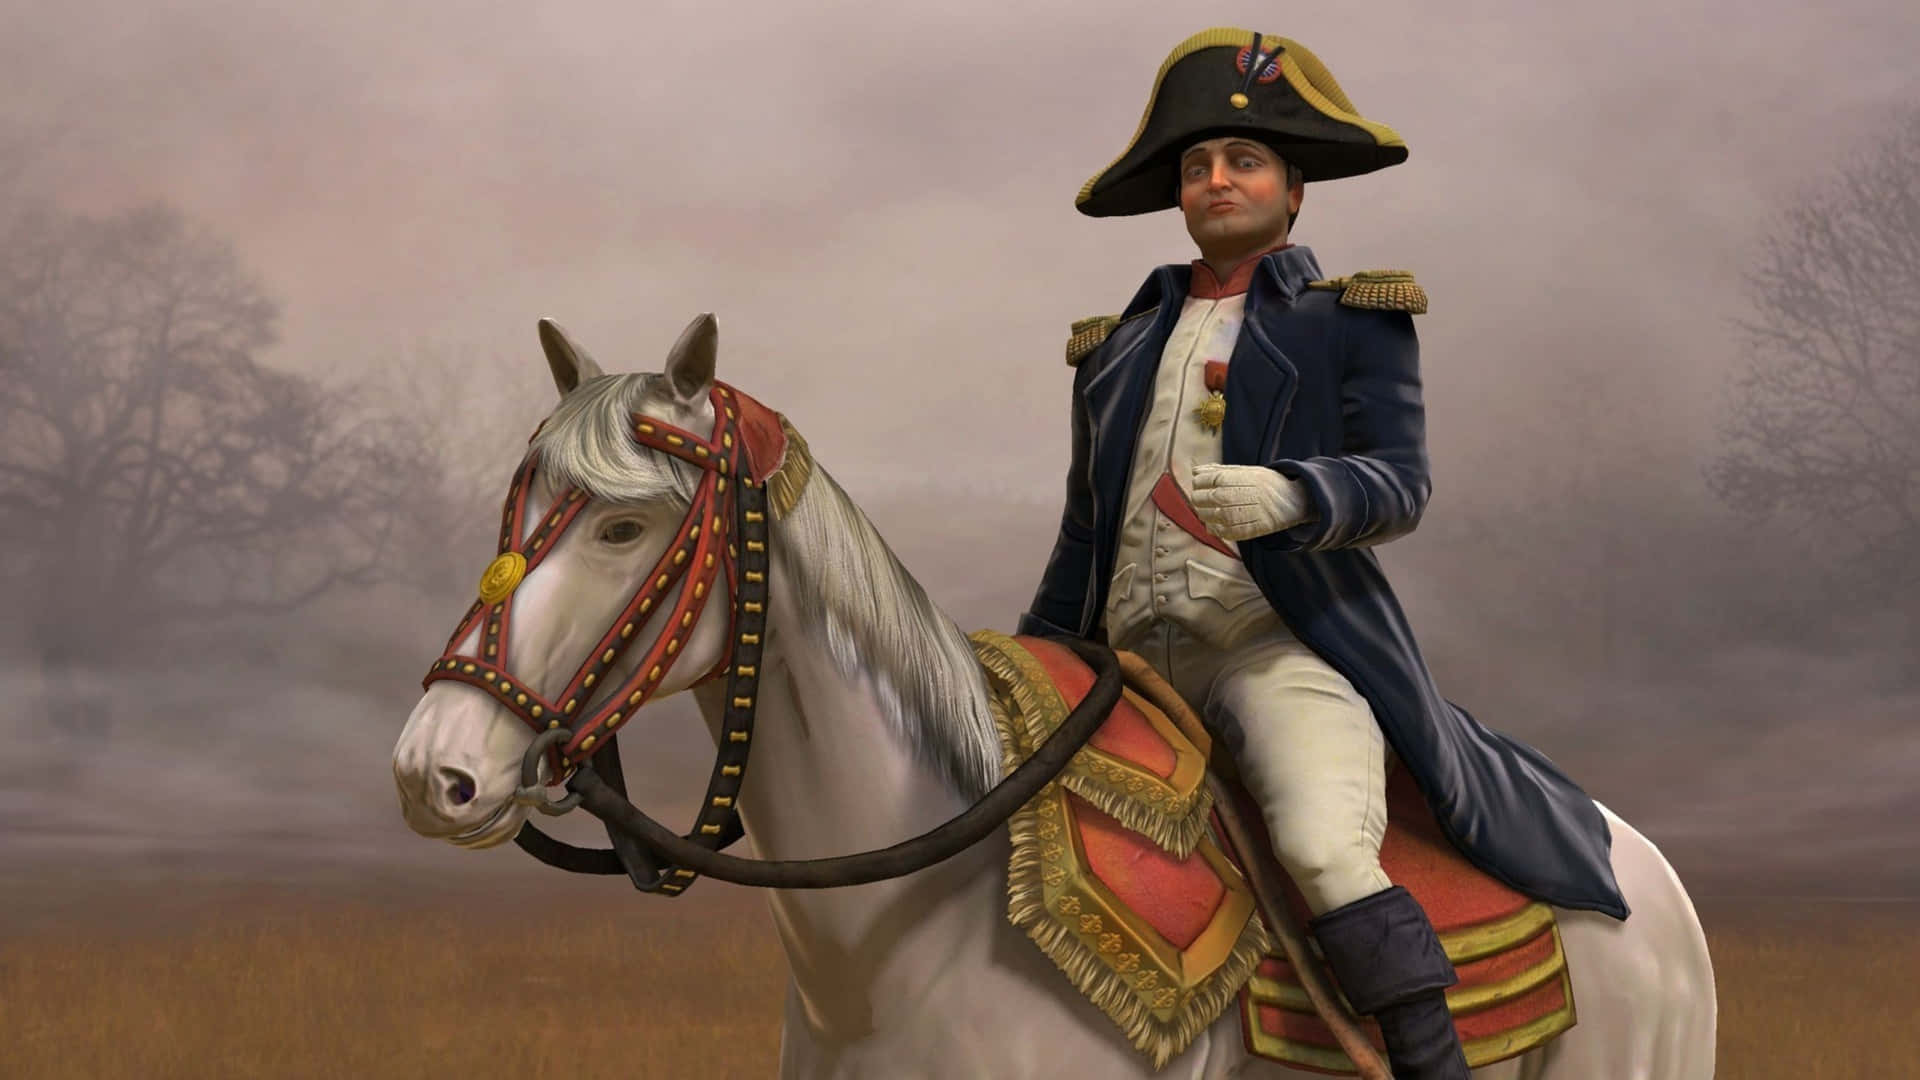 A Man In A Uniform Riding A Horse